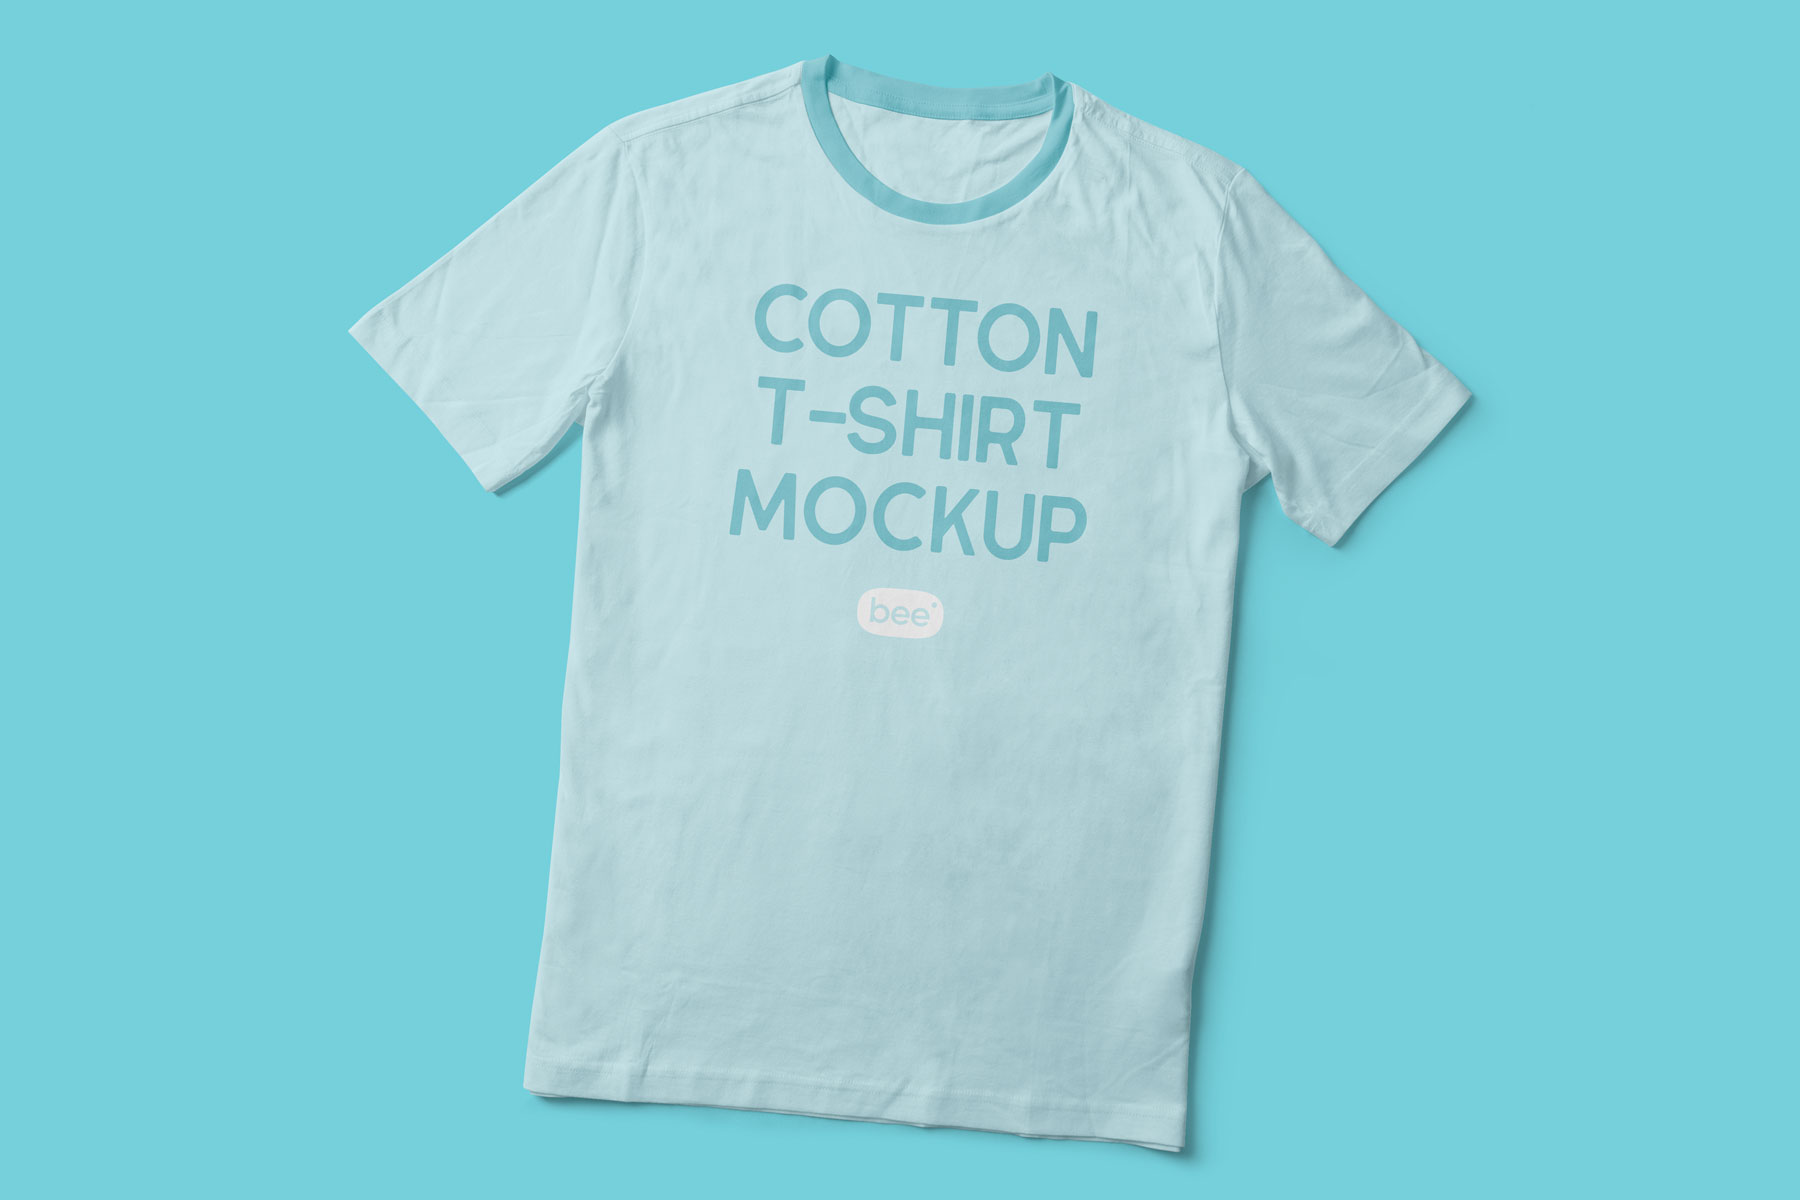 Free Cotton T-Shirt Mockup PSD - PsFiles